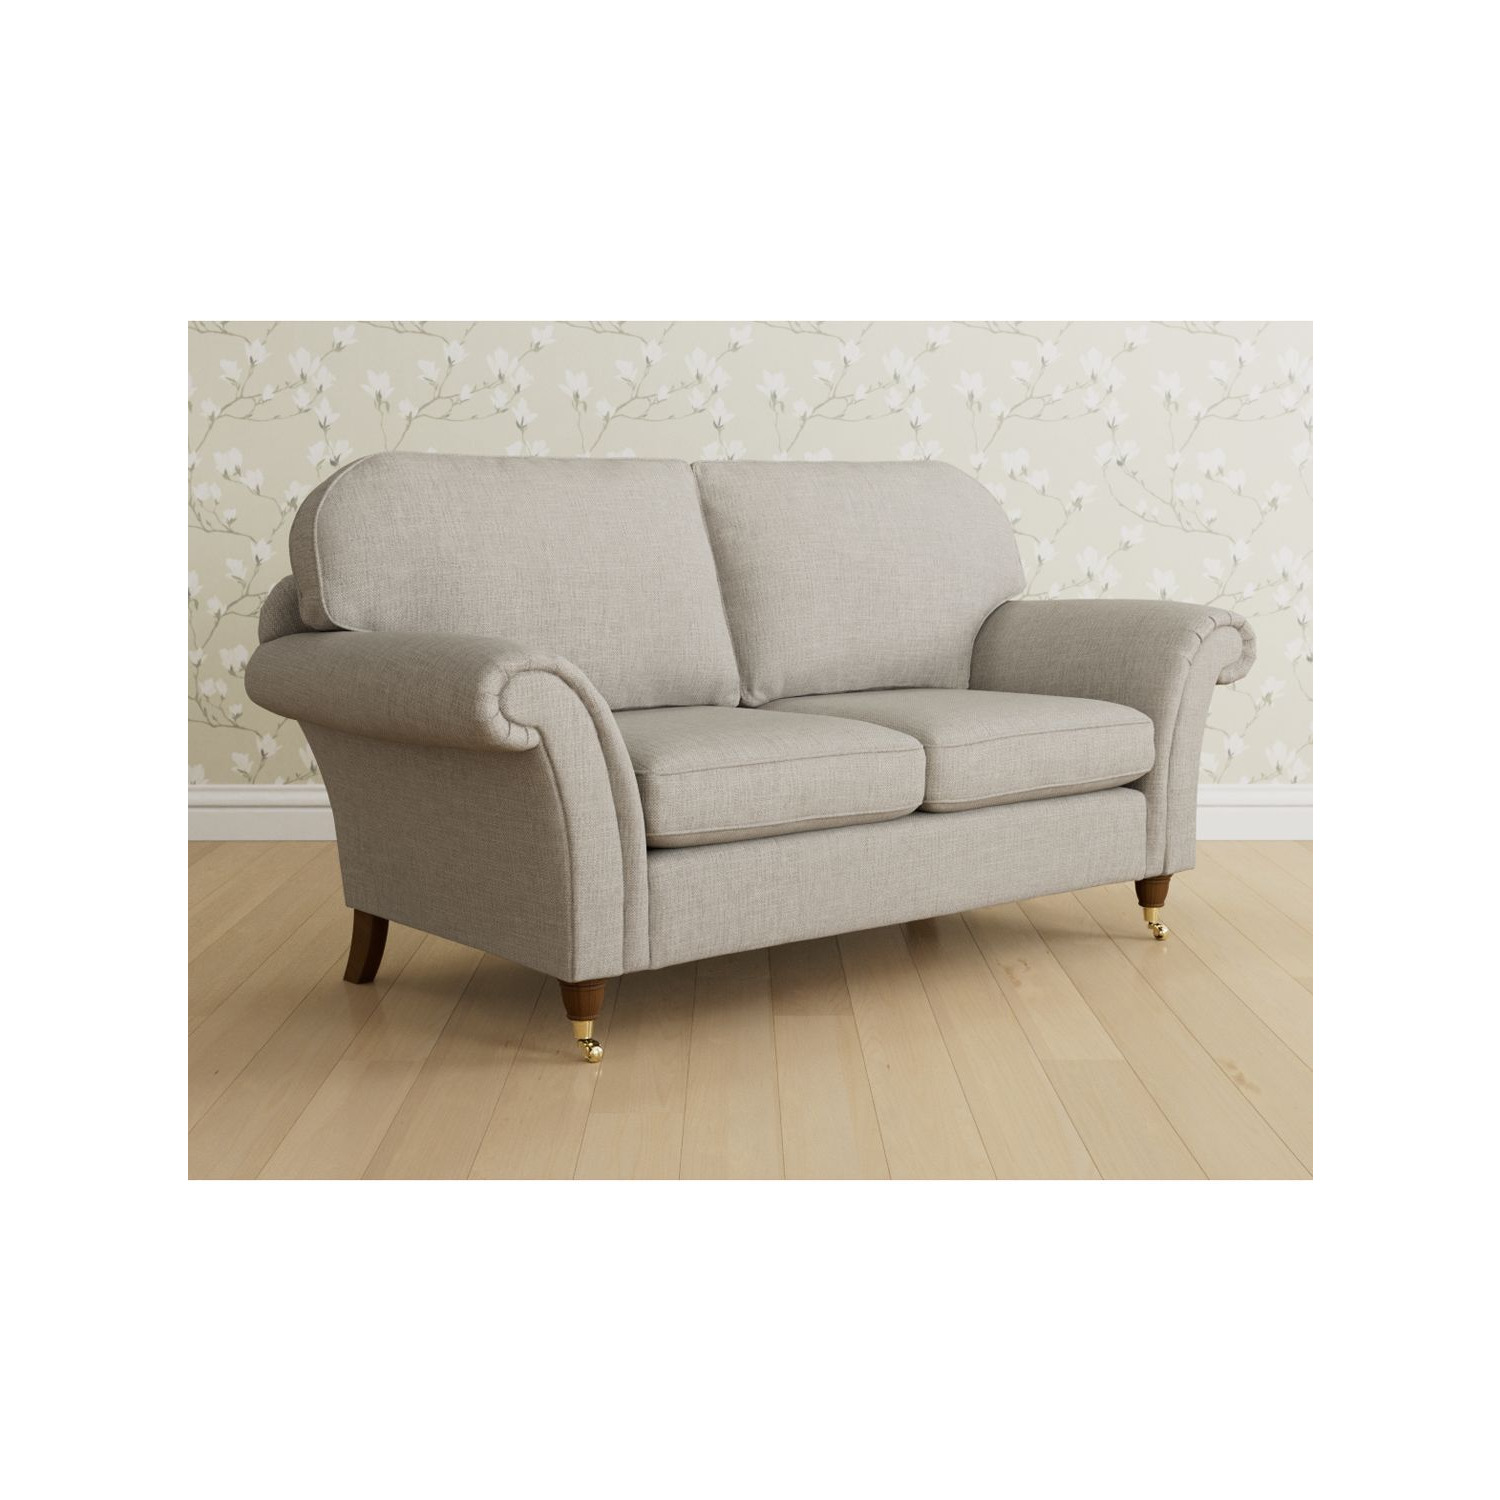 Laura Ashley Mortimer Medium 2 Seater Sofa, Teak Leg - image 1